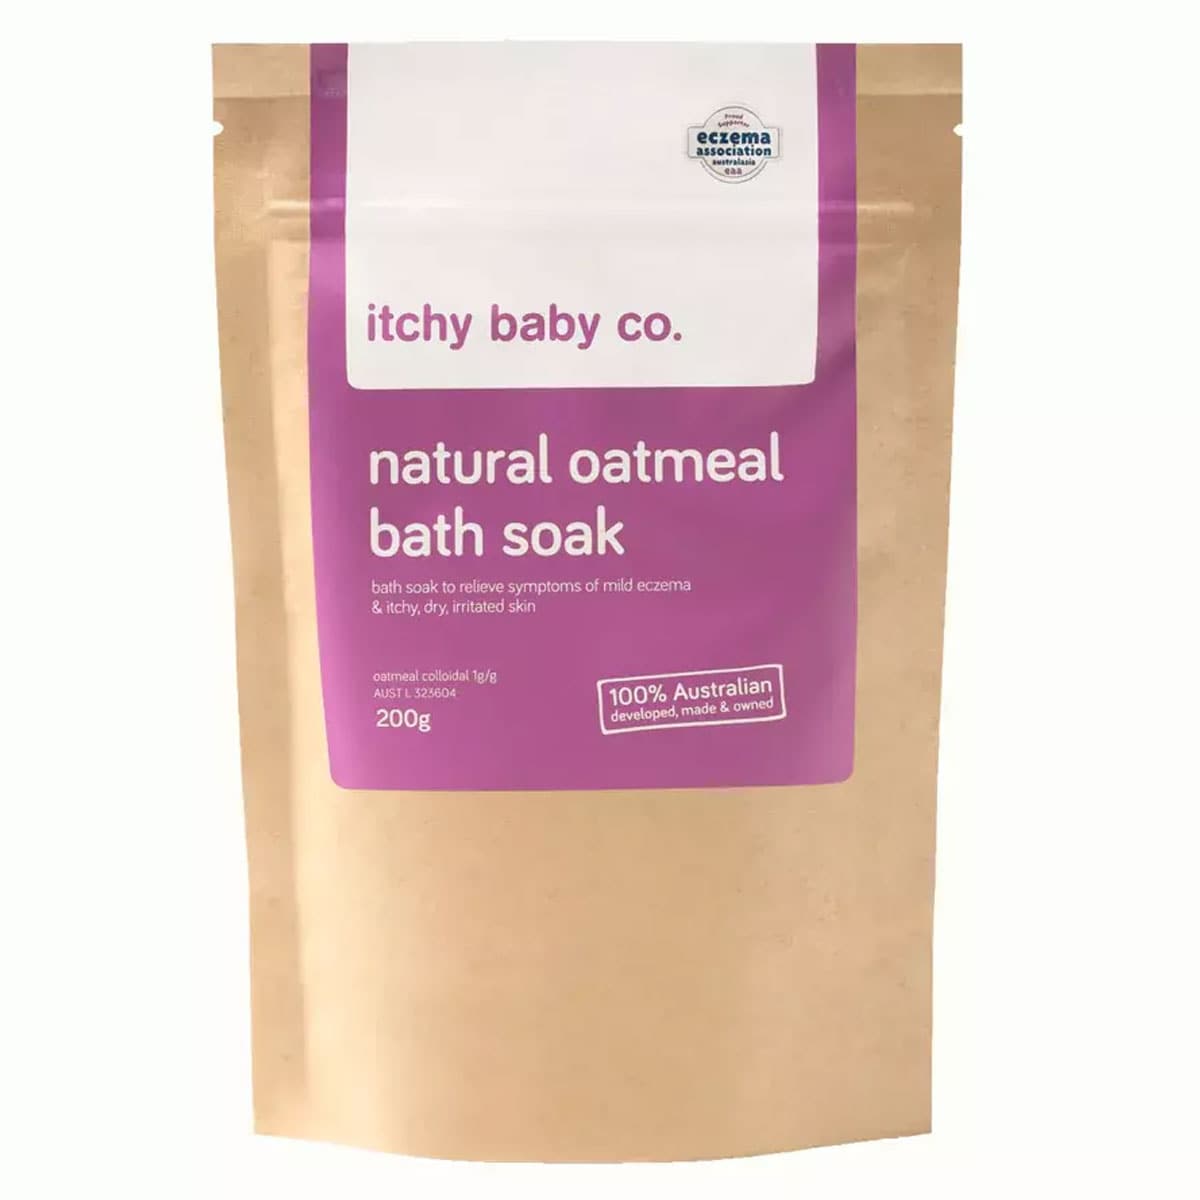 Itchy Baby Co. Natural Oatmeal Bath Soak 200g